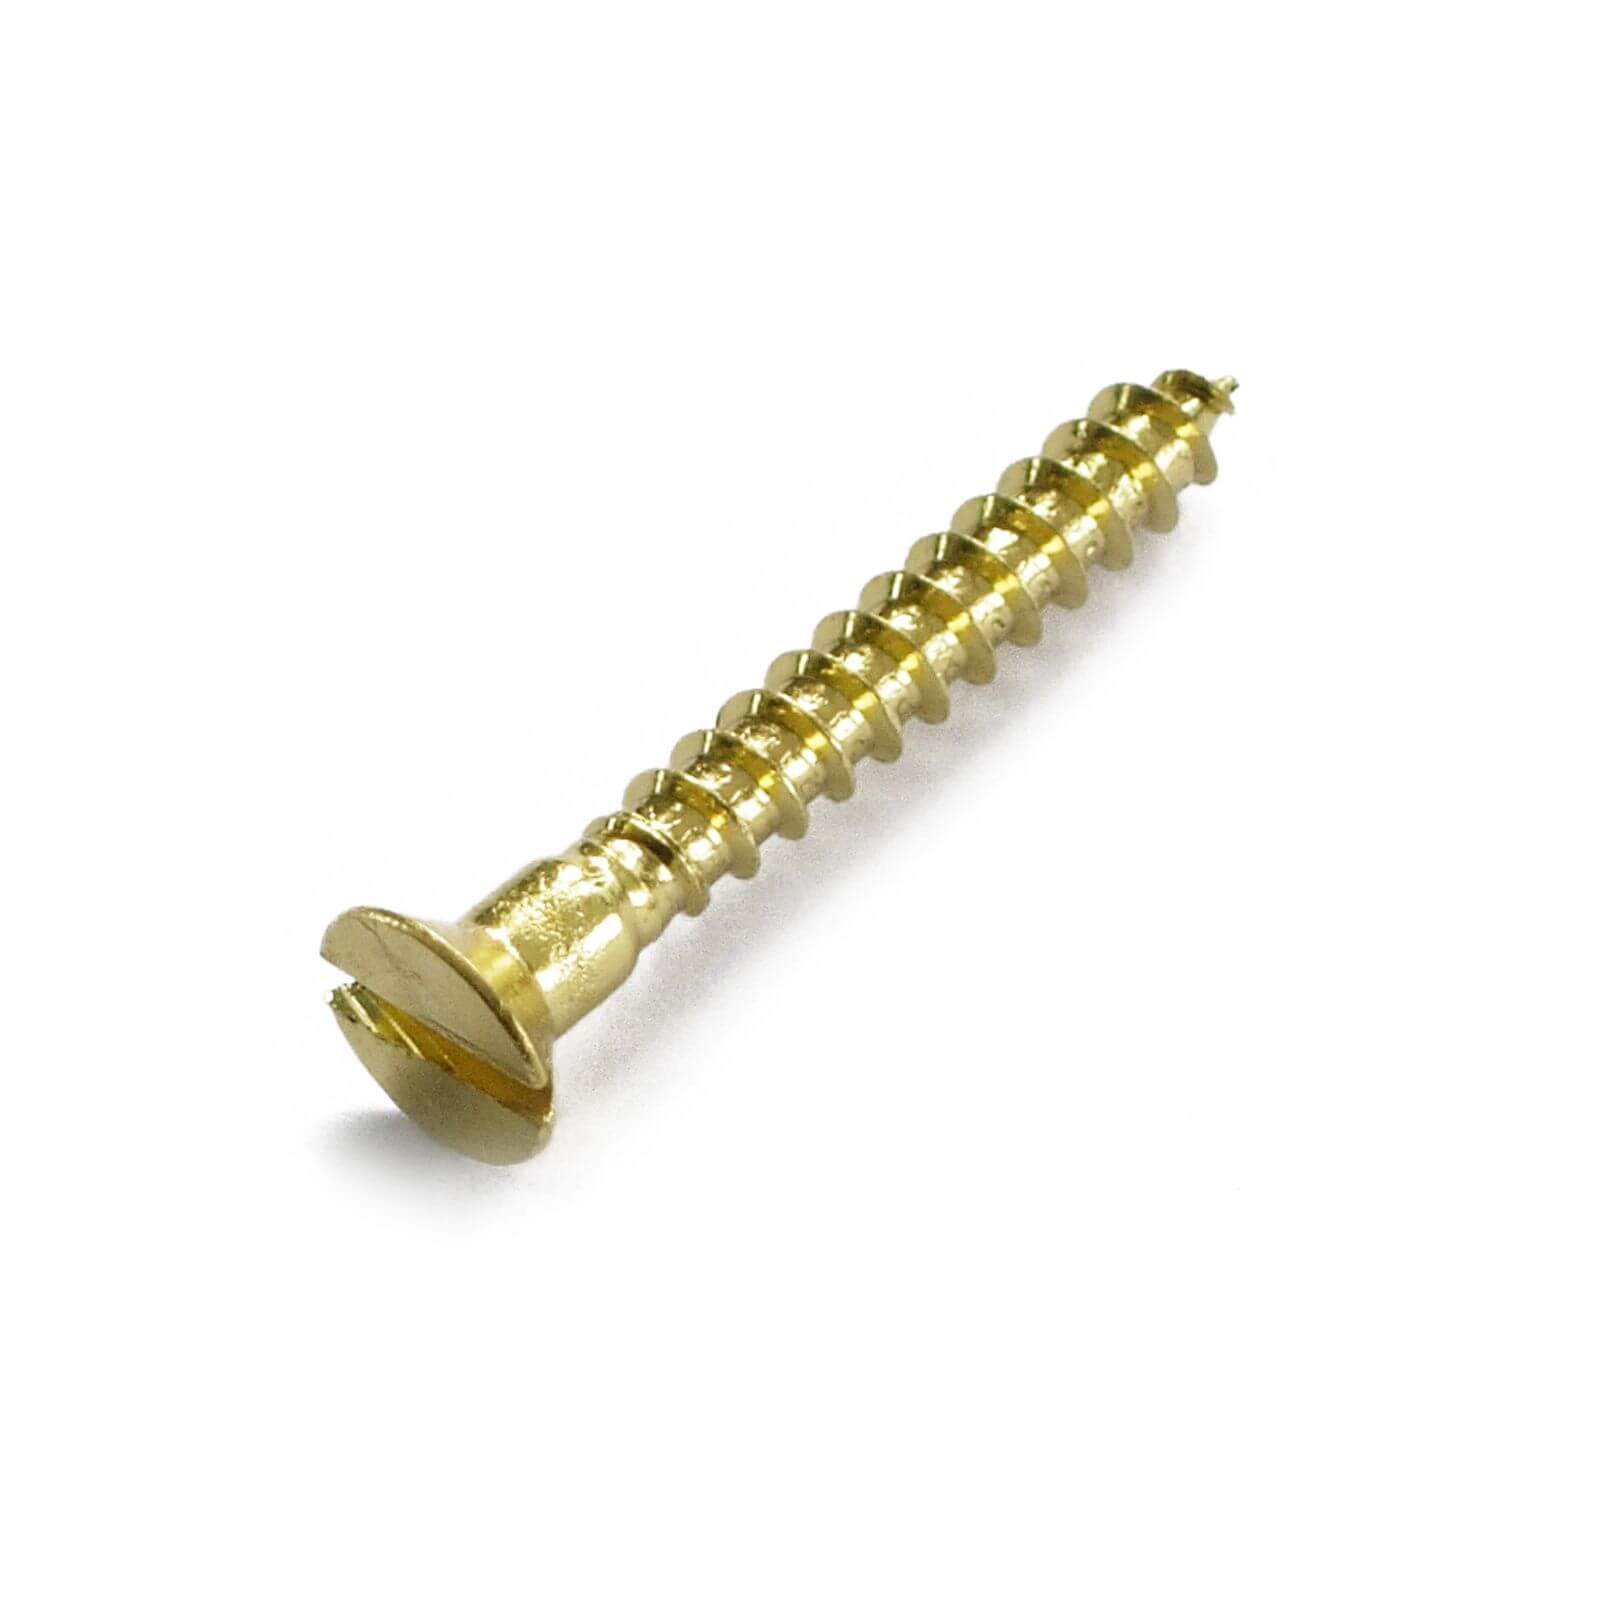 Wood Screw - Countersunk - Brass - 3.5 x 20mm - 10 Pack